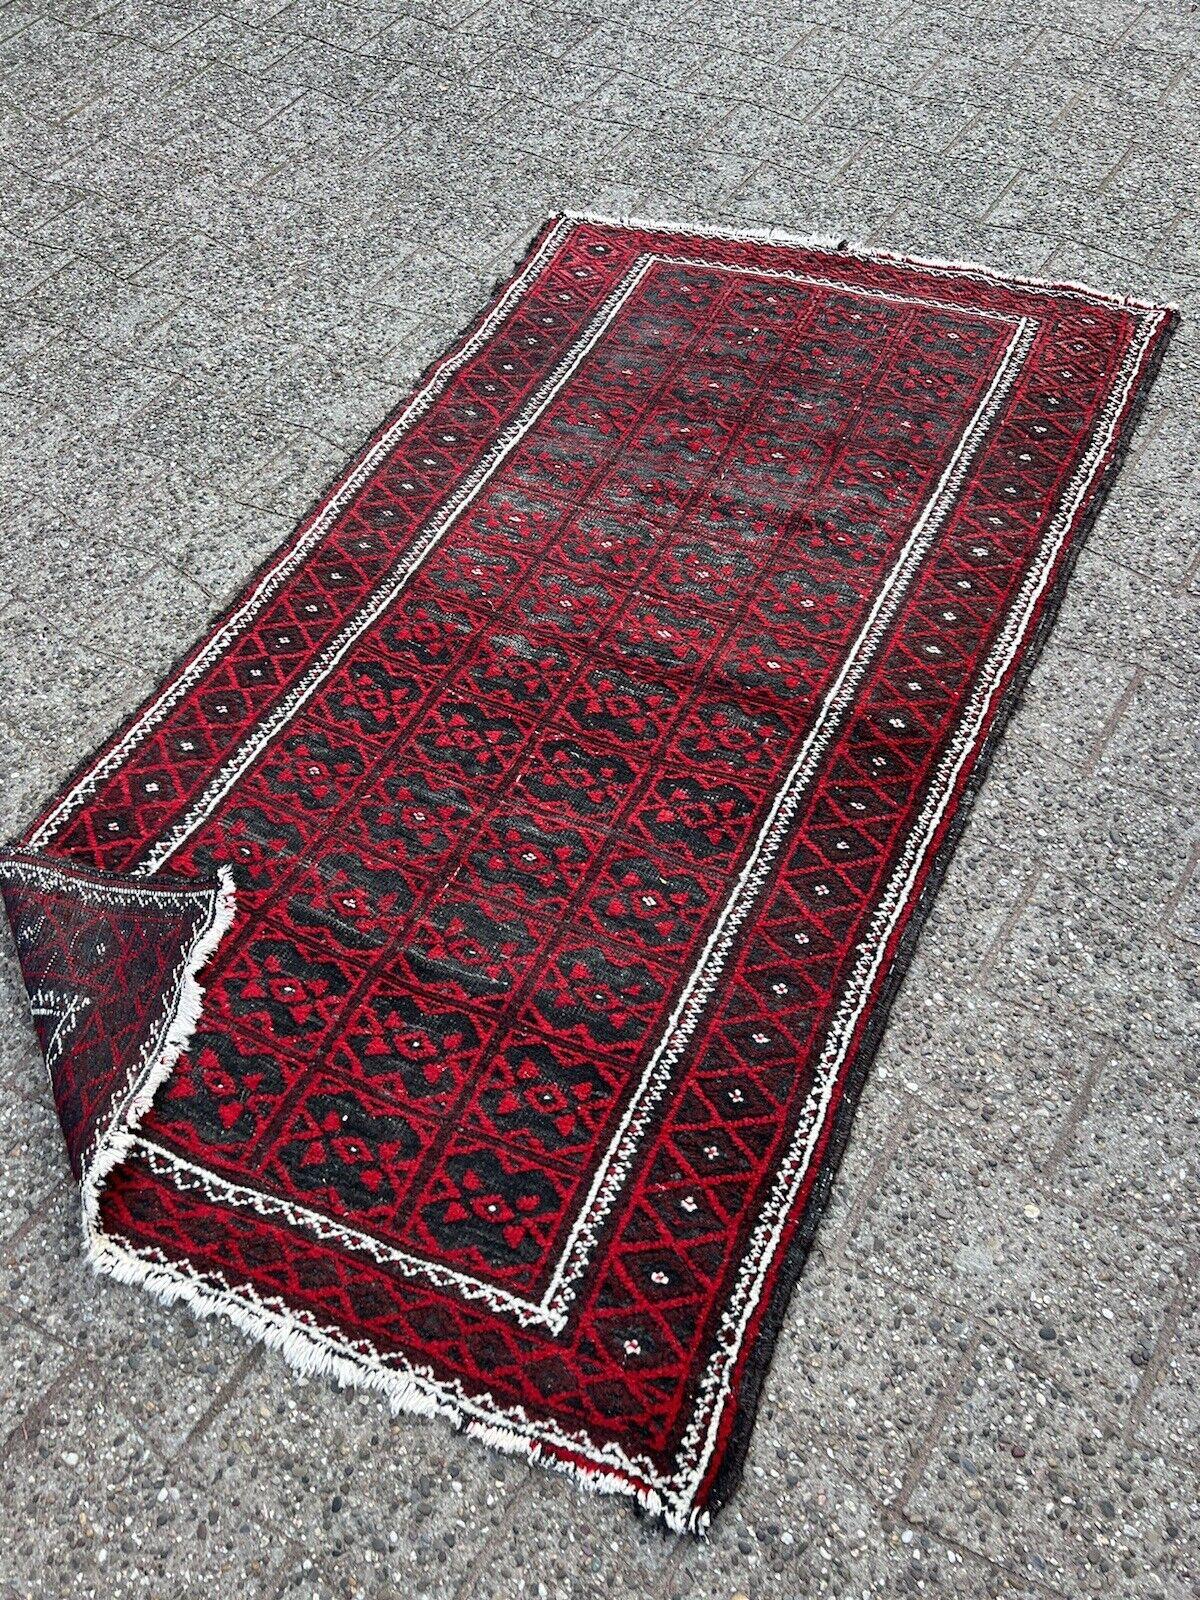 Mid-20th Century Handmade Vintage Afghan Baluch Rug 2.9' x 5.3', 1960s - 1S32 For Sale